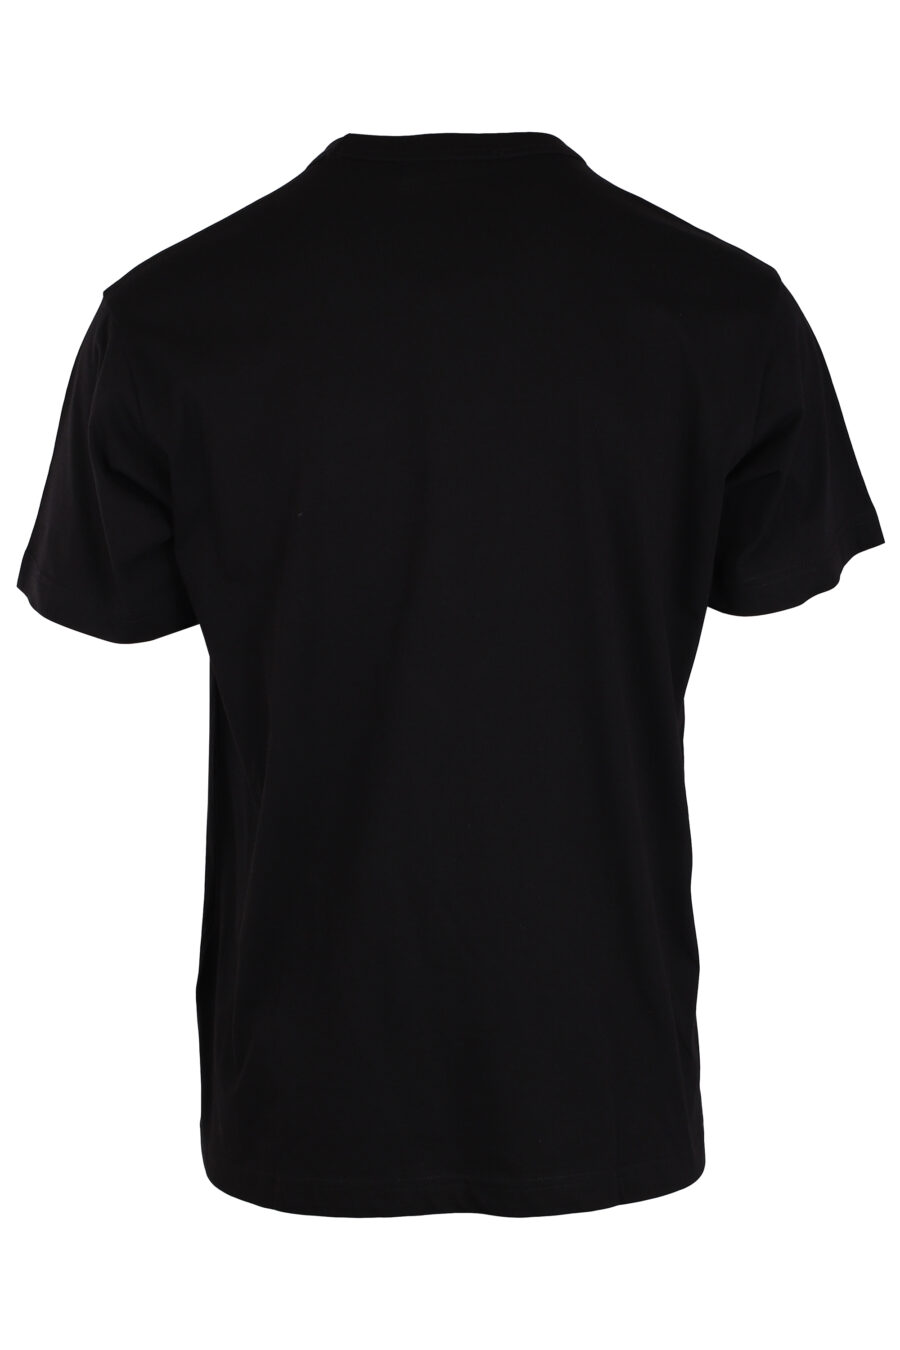 T-shirt preta com grande logótipo laranja - IMG 4020